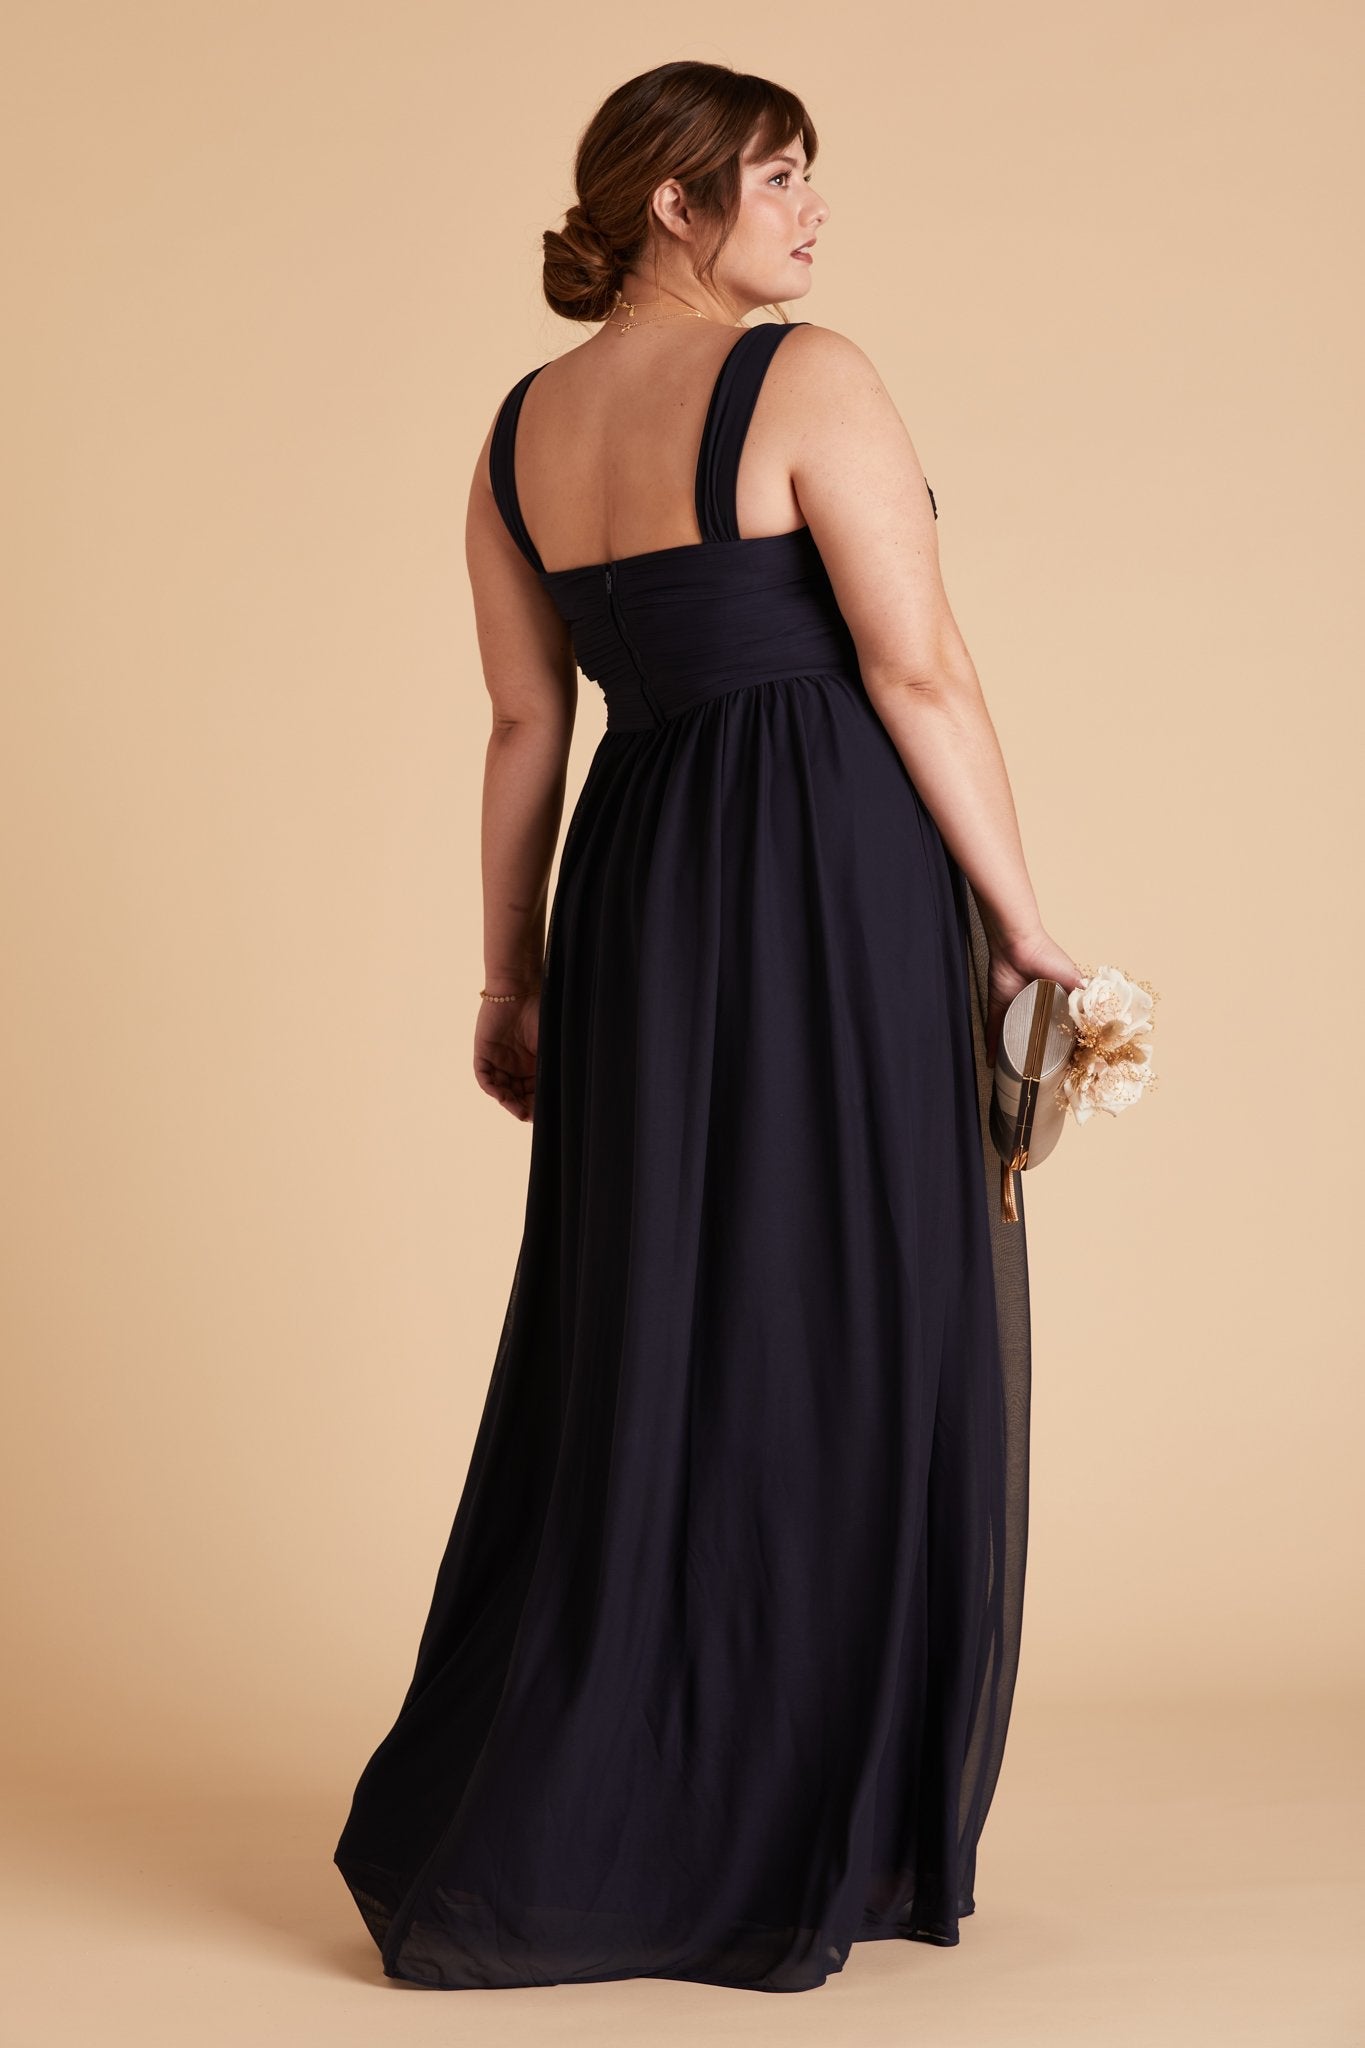 Elsye plus size bridesmaid dress in navy blue chiffon by Birdy Grey, back view